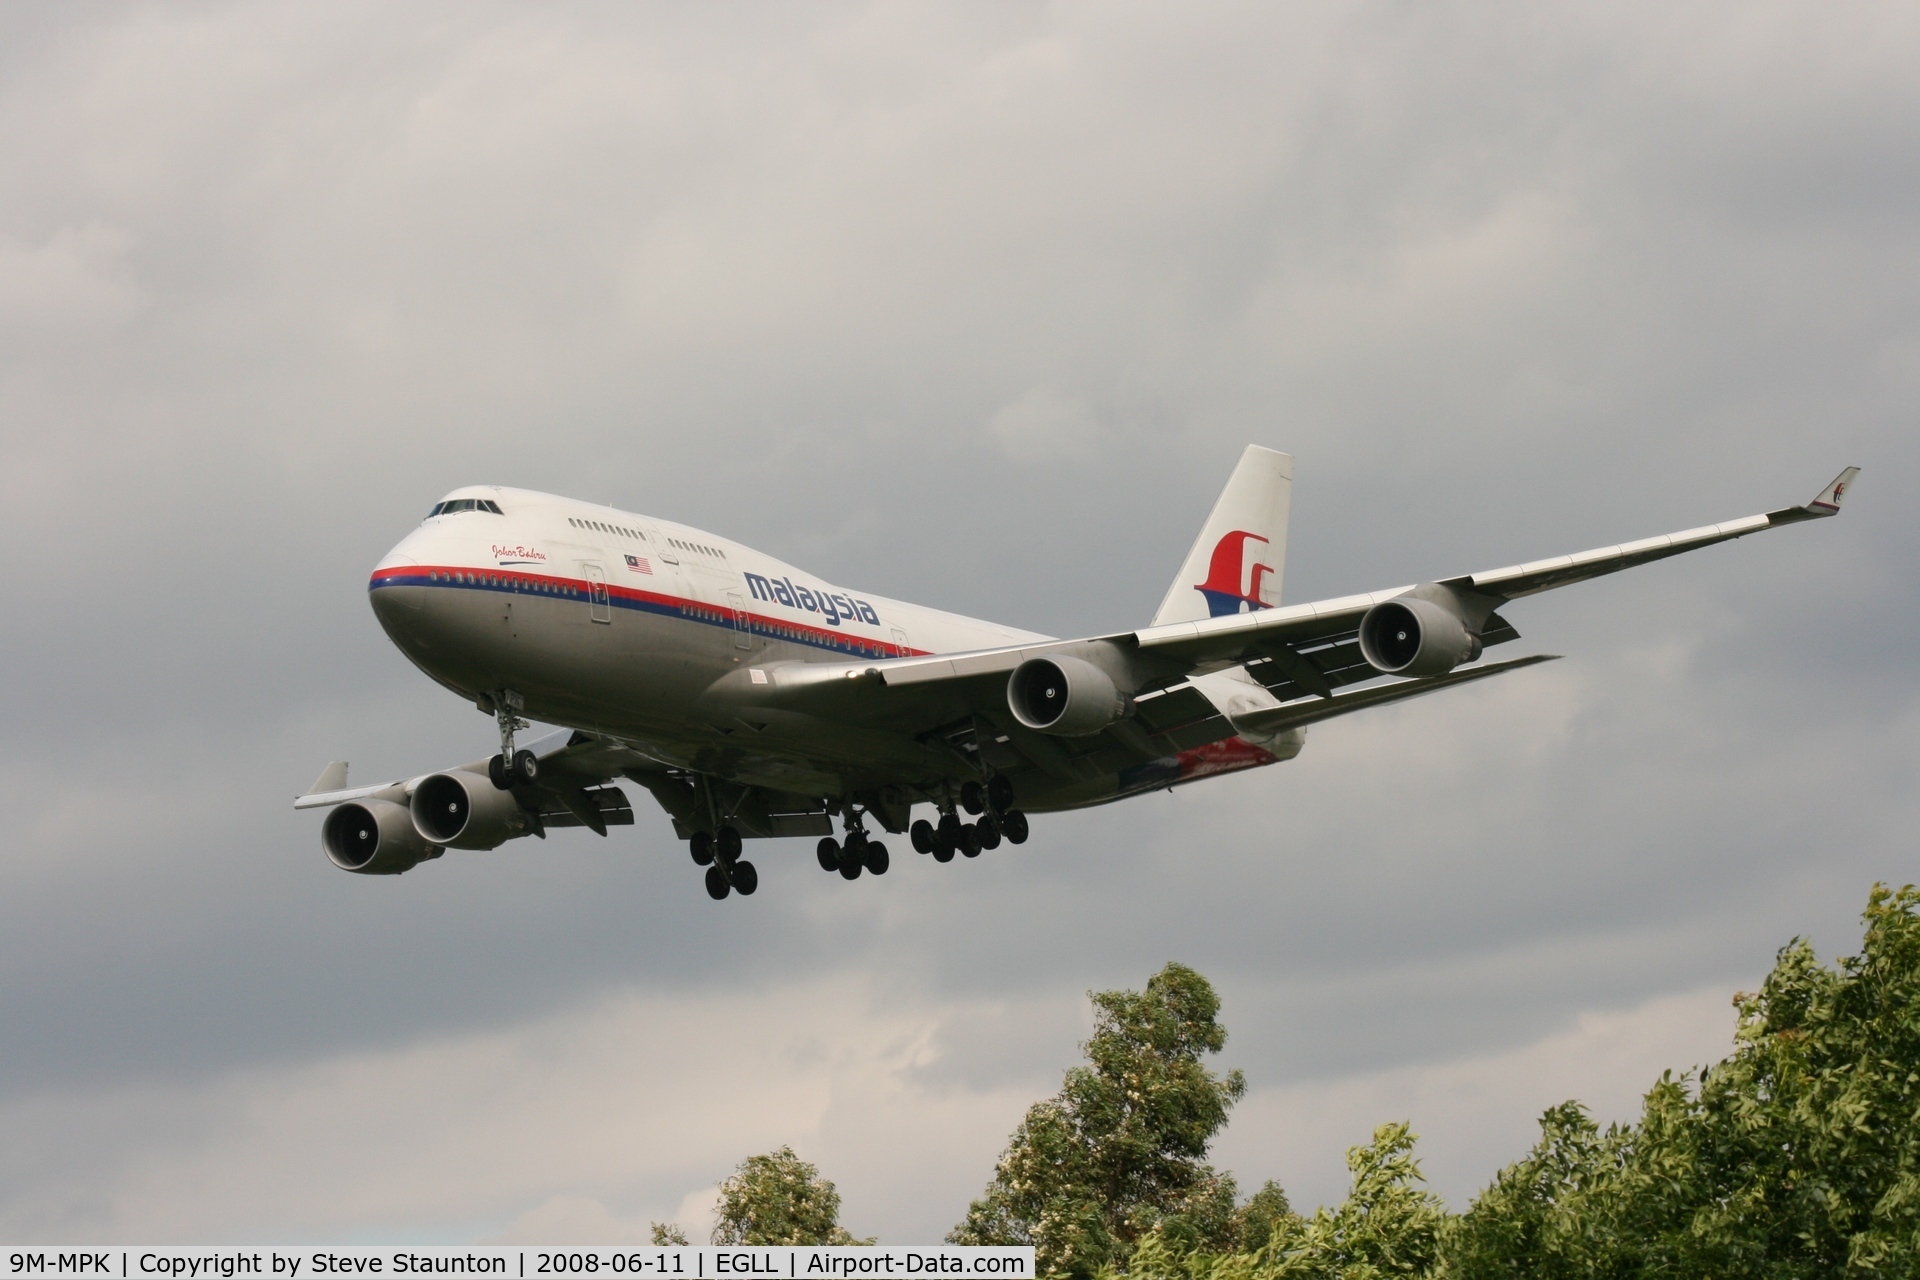 9M-MPK, 1998 Boeing 747-4H6 C/N 28427, Taken at London Heathrow 11th June 2008